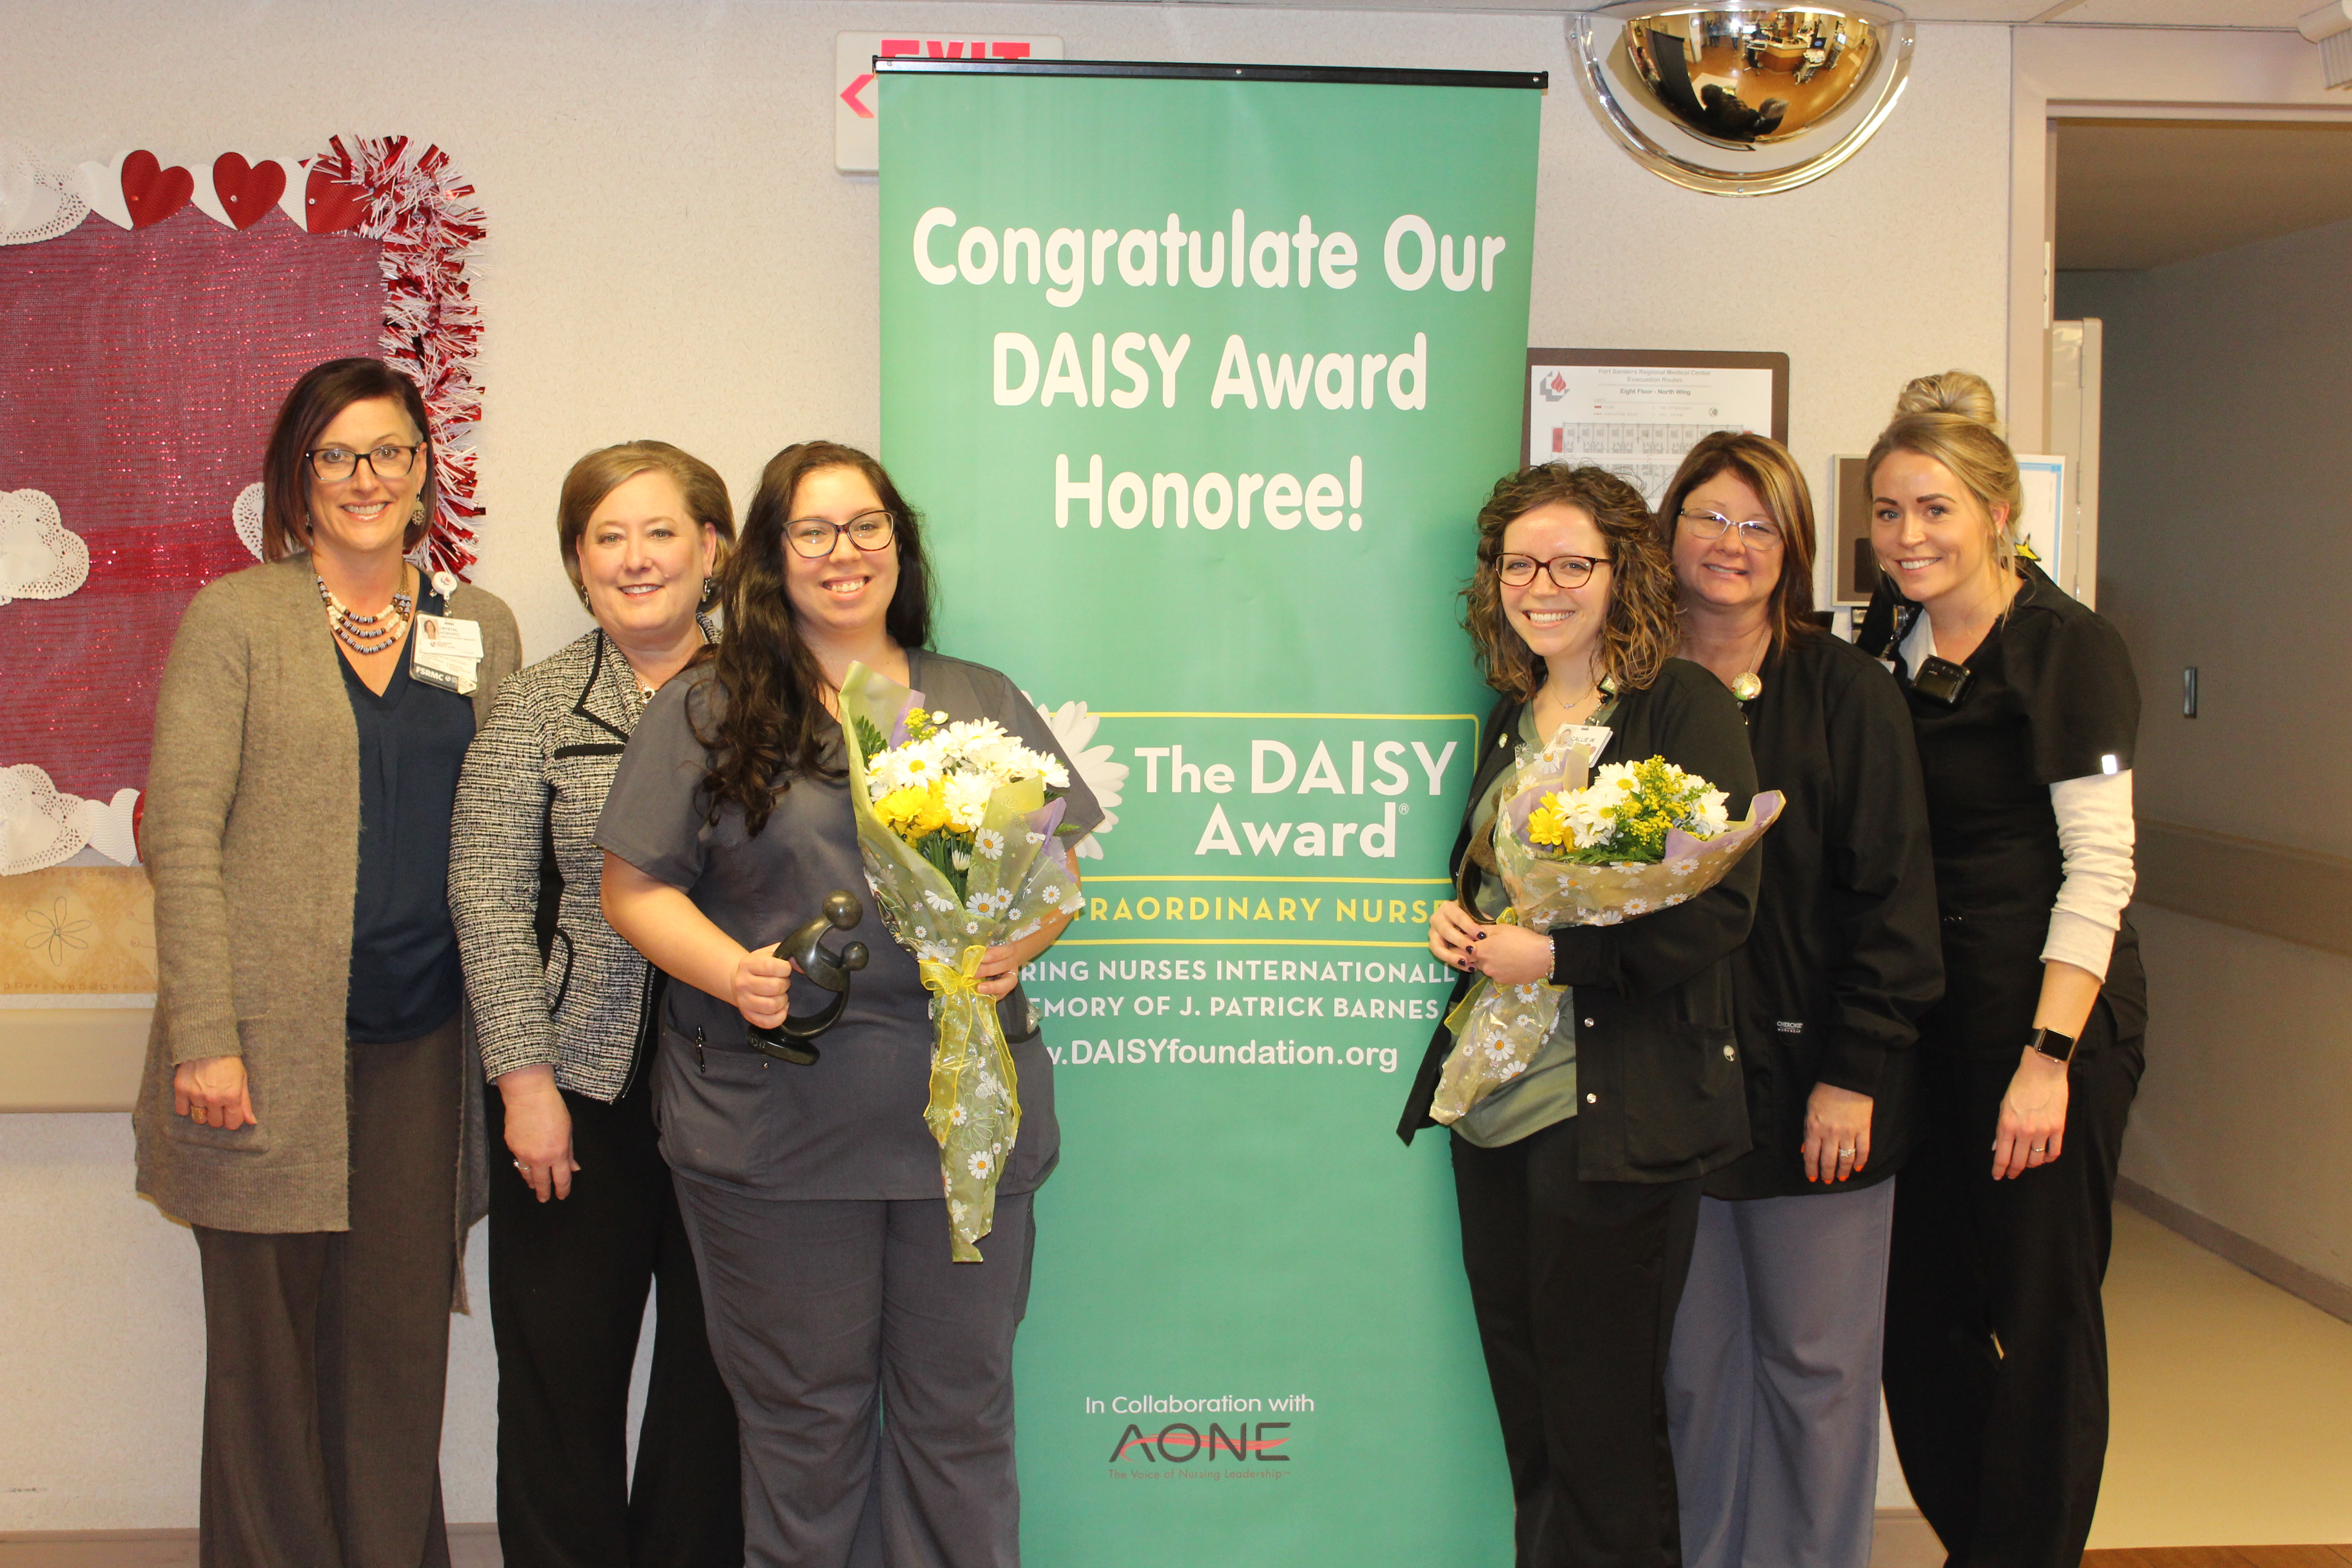 Oncology nurses Felicia Bunch and Callie Wells receiving their DAISY awards